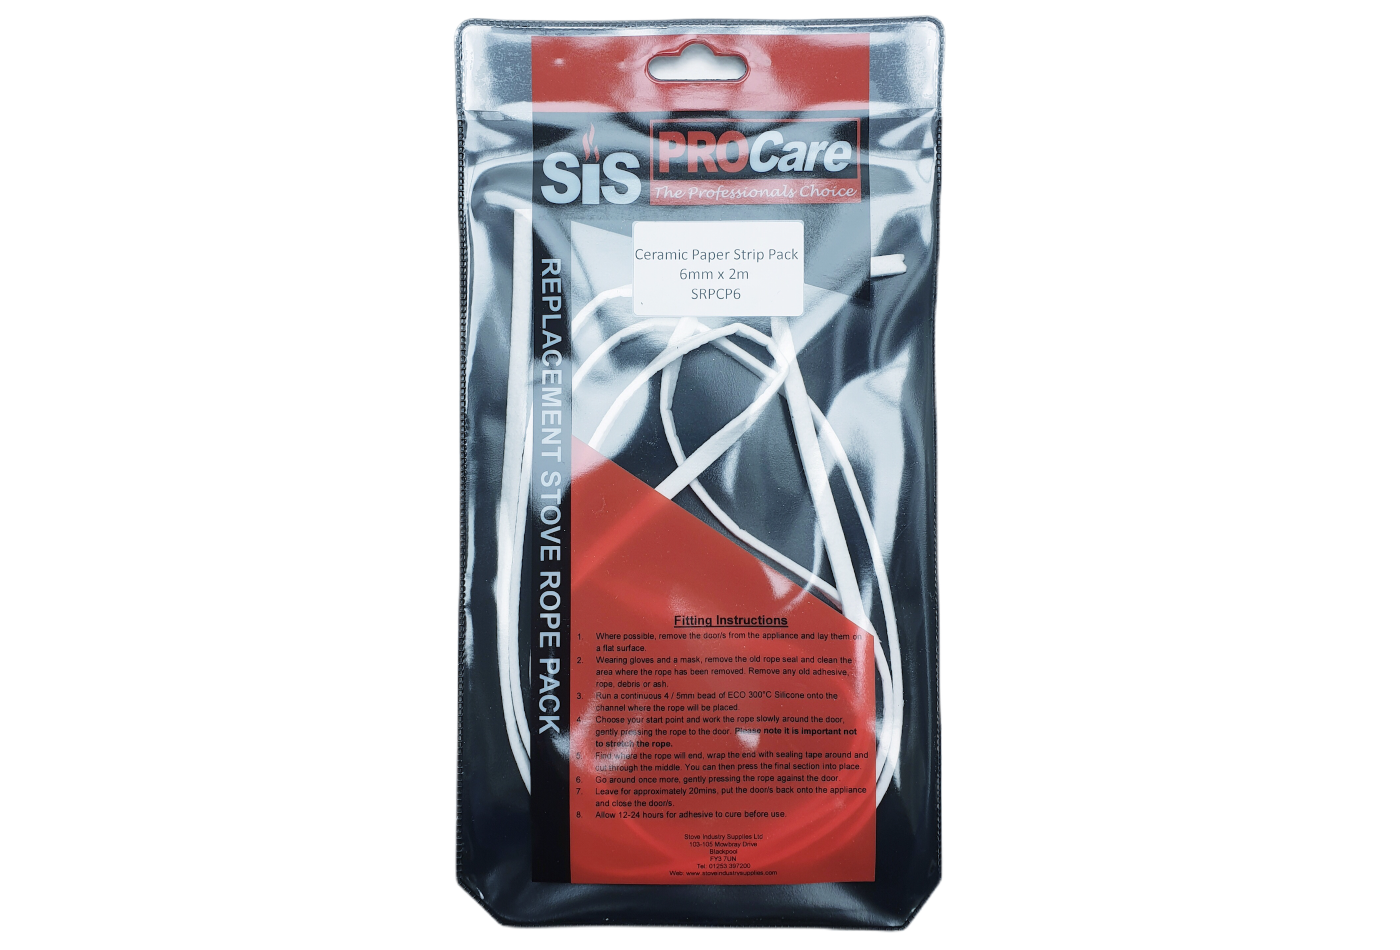 SiS Procare White 6 milimetre x 2 metre Ceramic Paper Strip Pack - product code SRPCP6